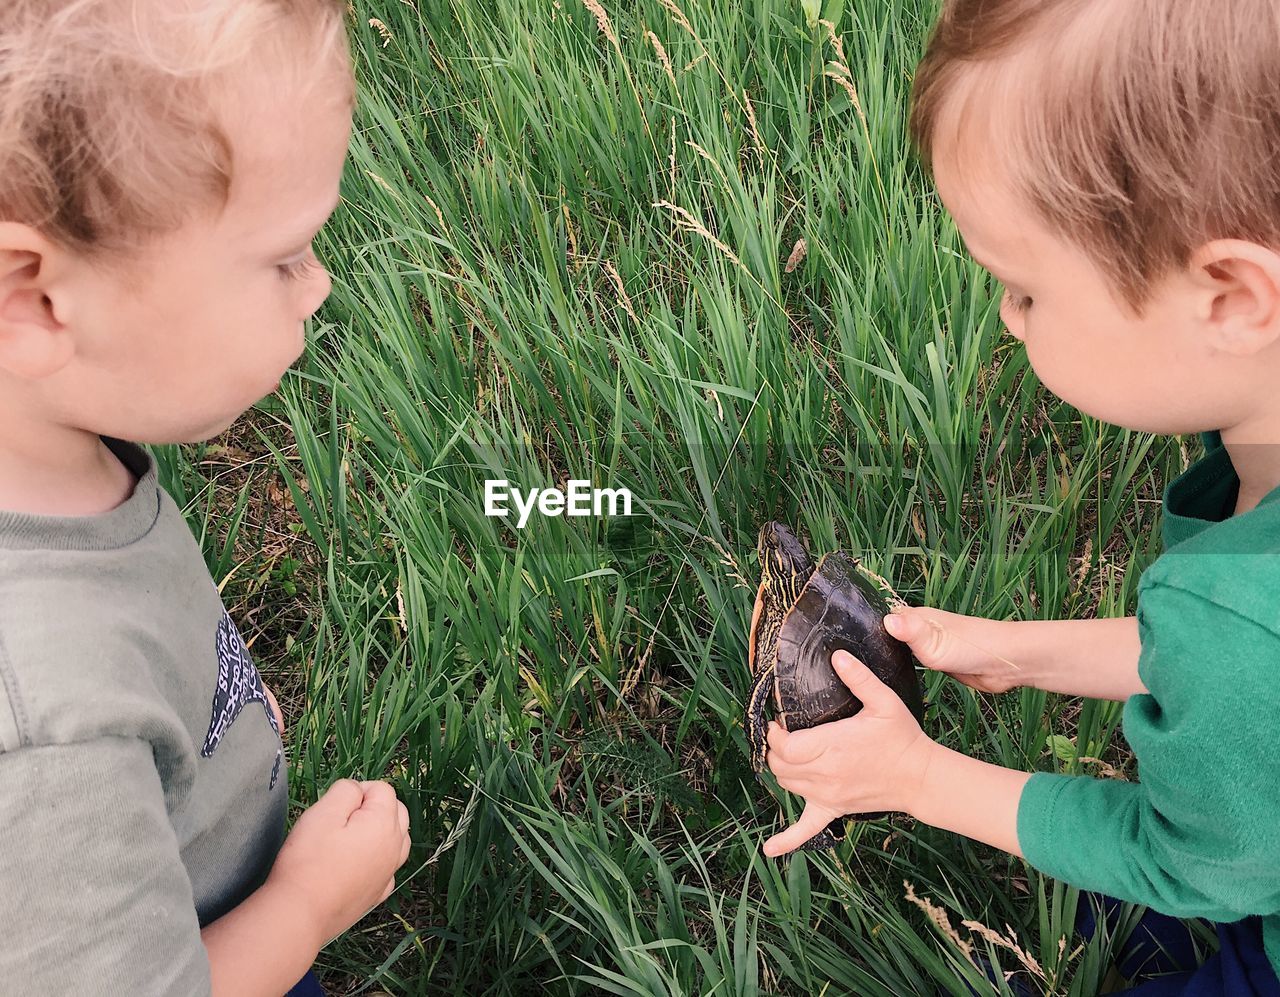 Children with turtle in grass